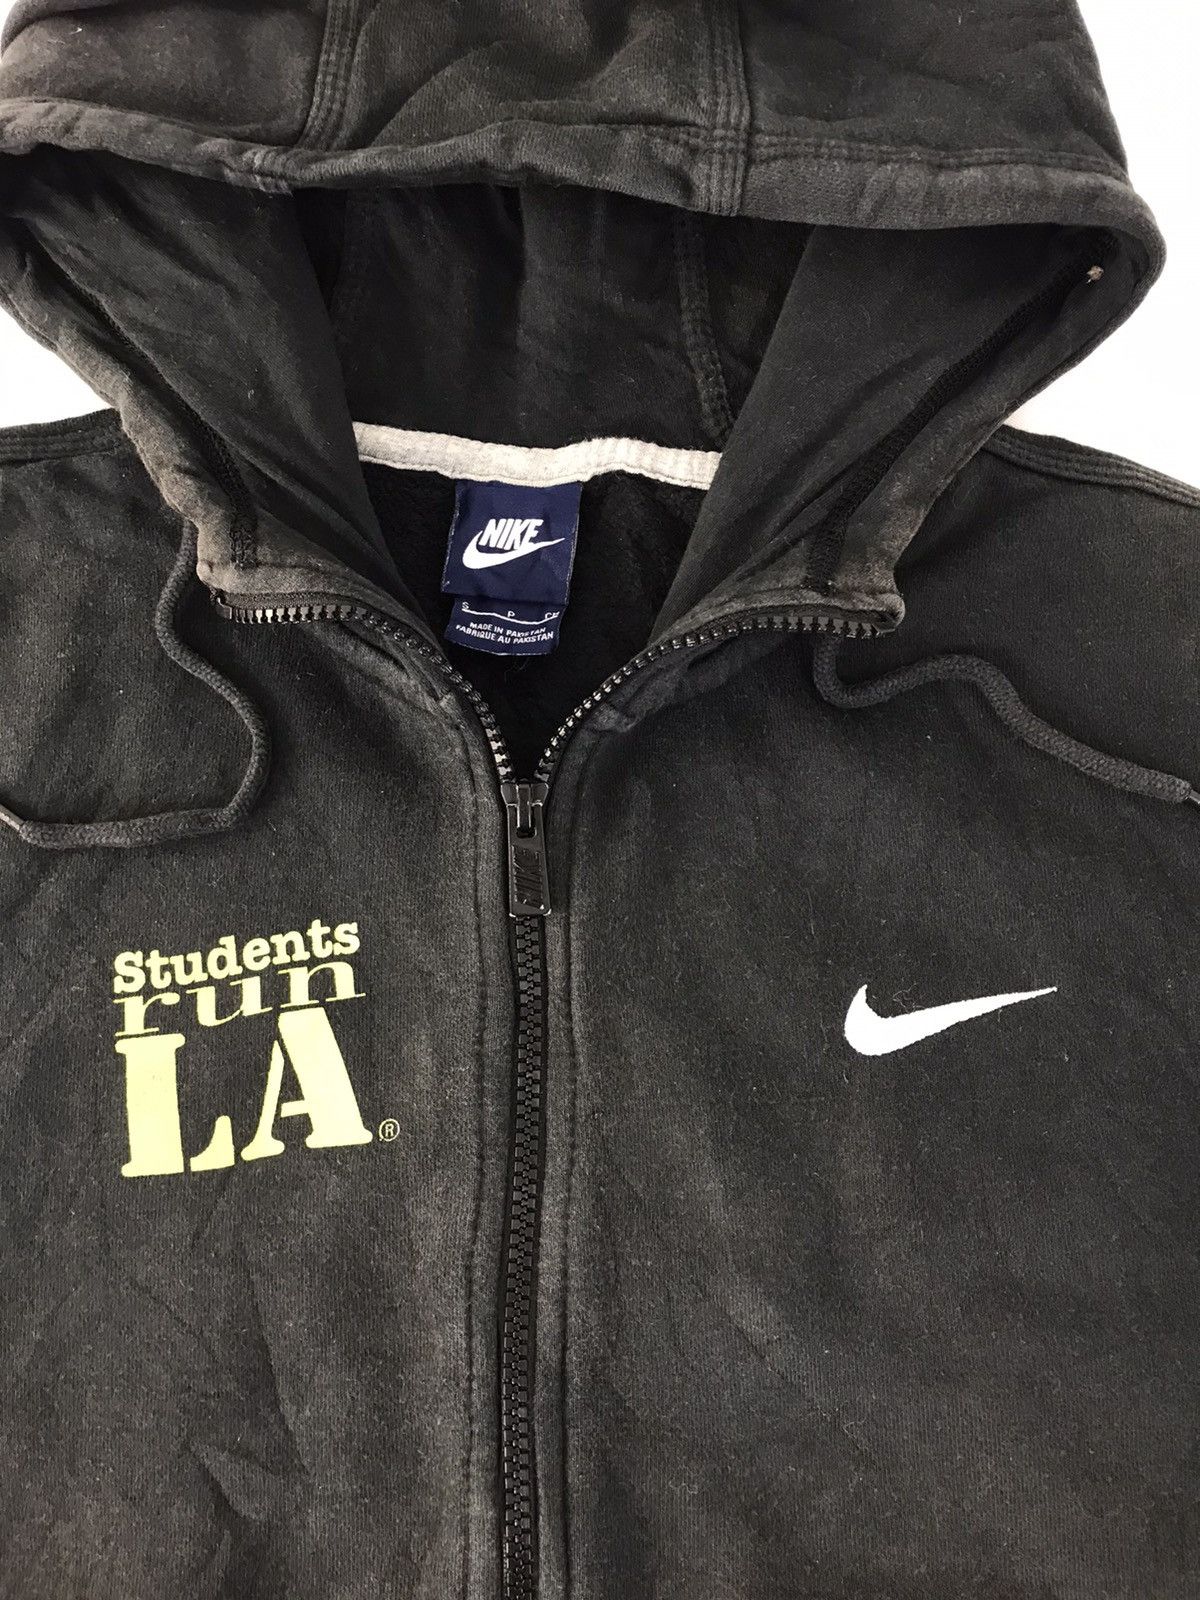 Nike Nike Marathon Finisher Student Run LA Hoodies Jacket Zip Up Size US M / EU 48-50 / 2 - 4 Thumbnail